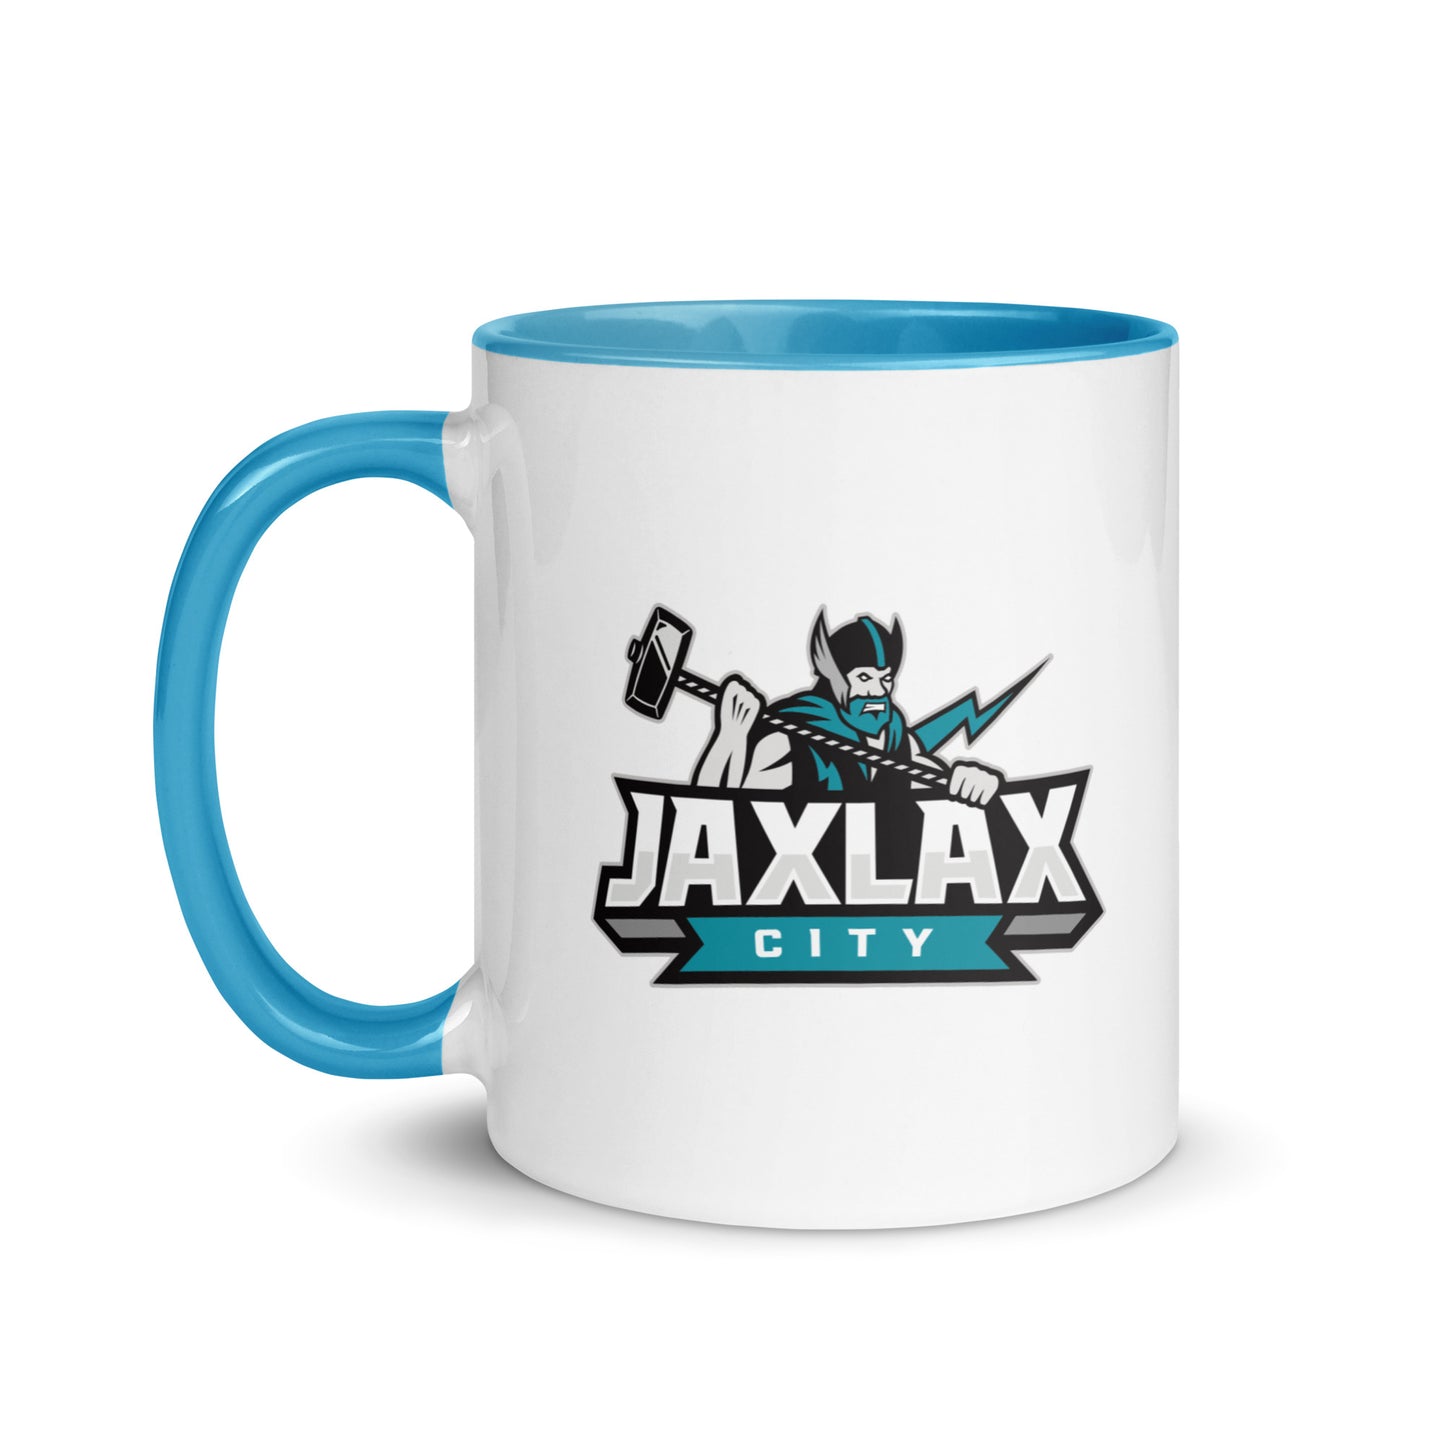 Jax Lax City - Mug with Color Inside